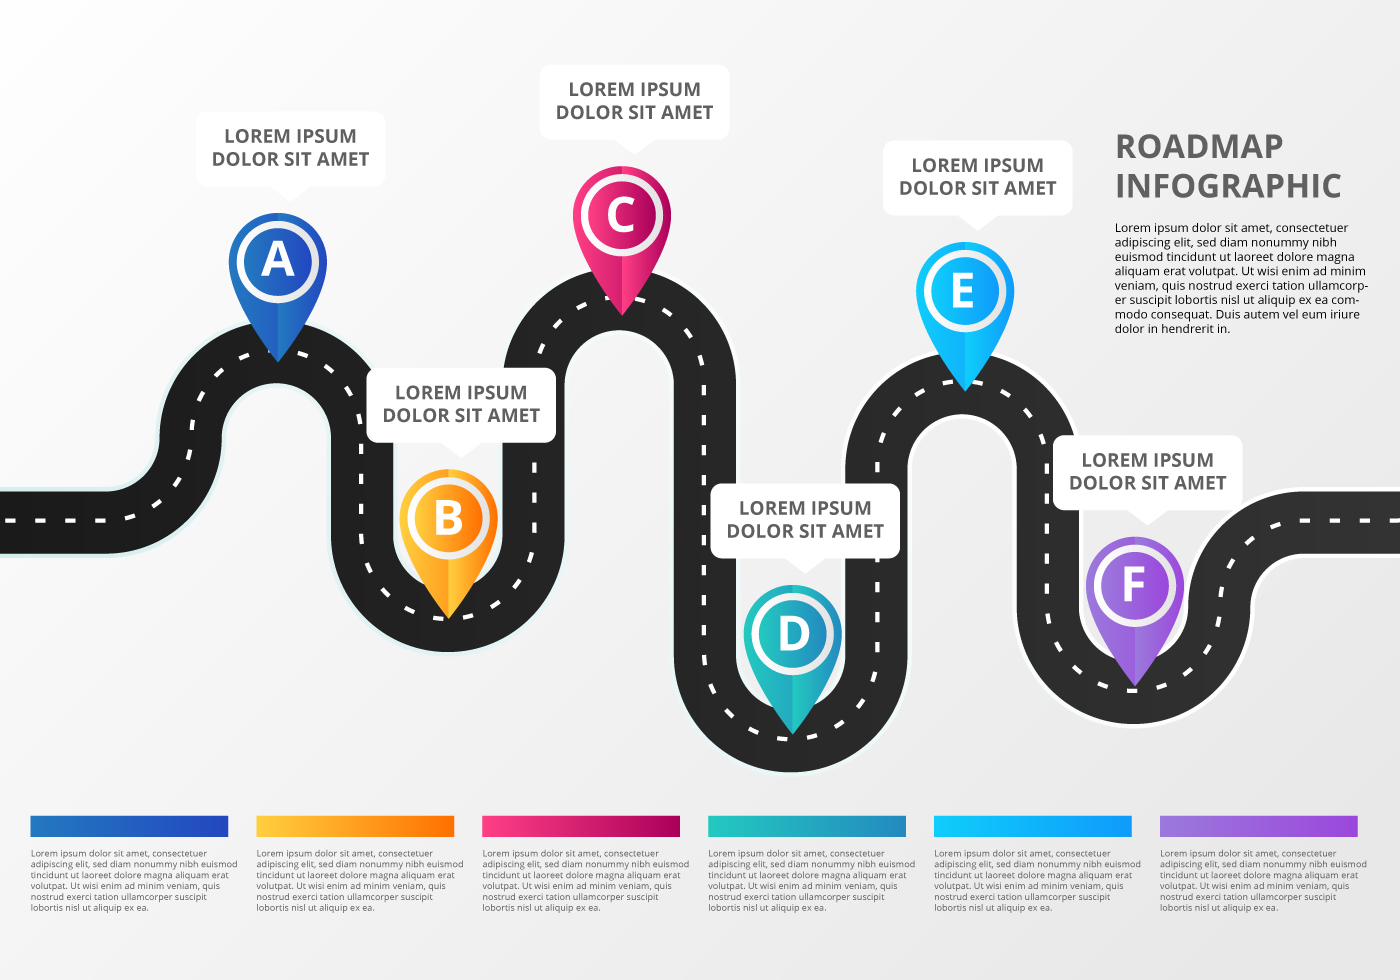 Training Roadmap Infographic | Visual.ly